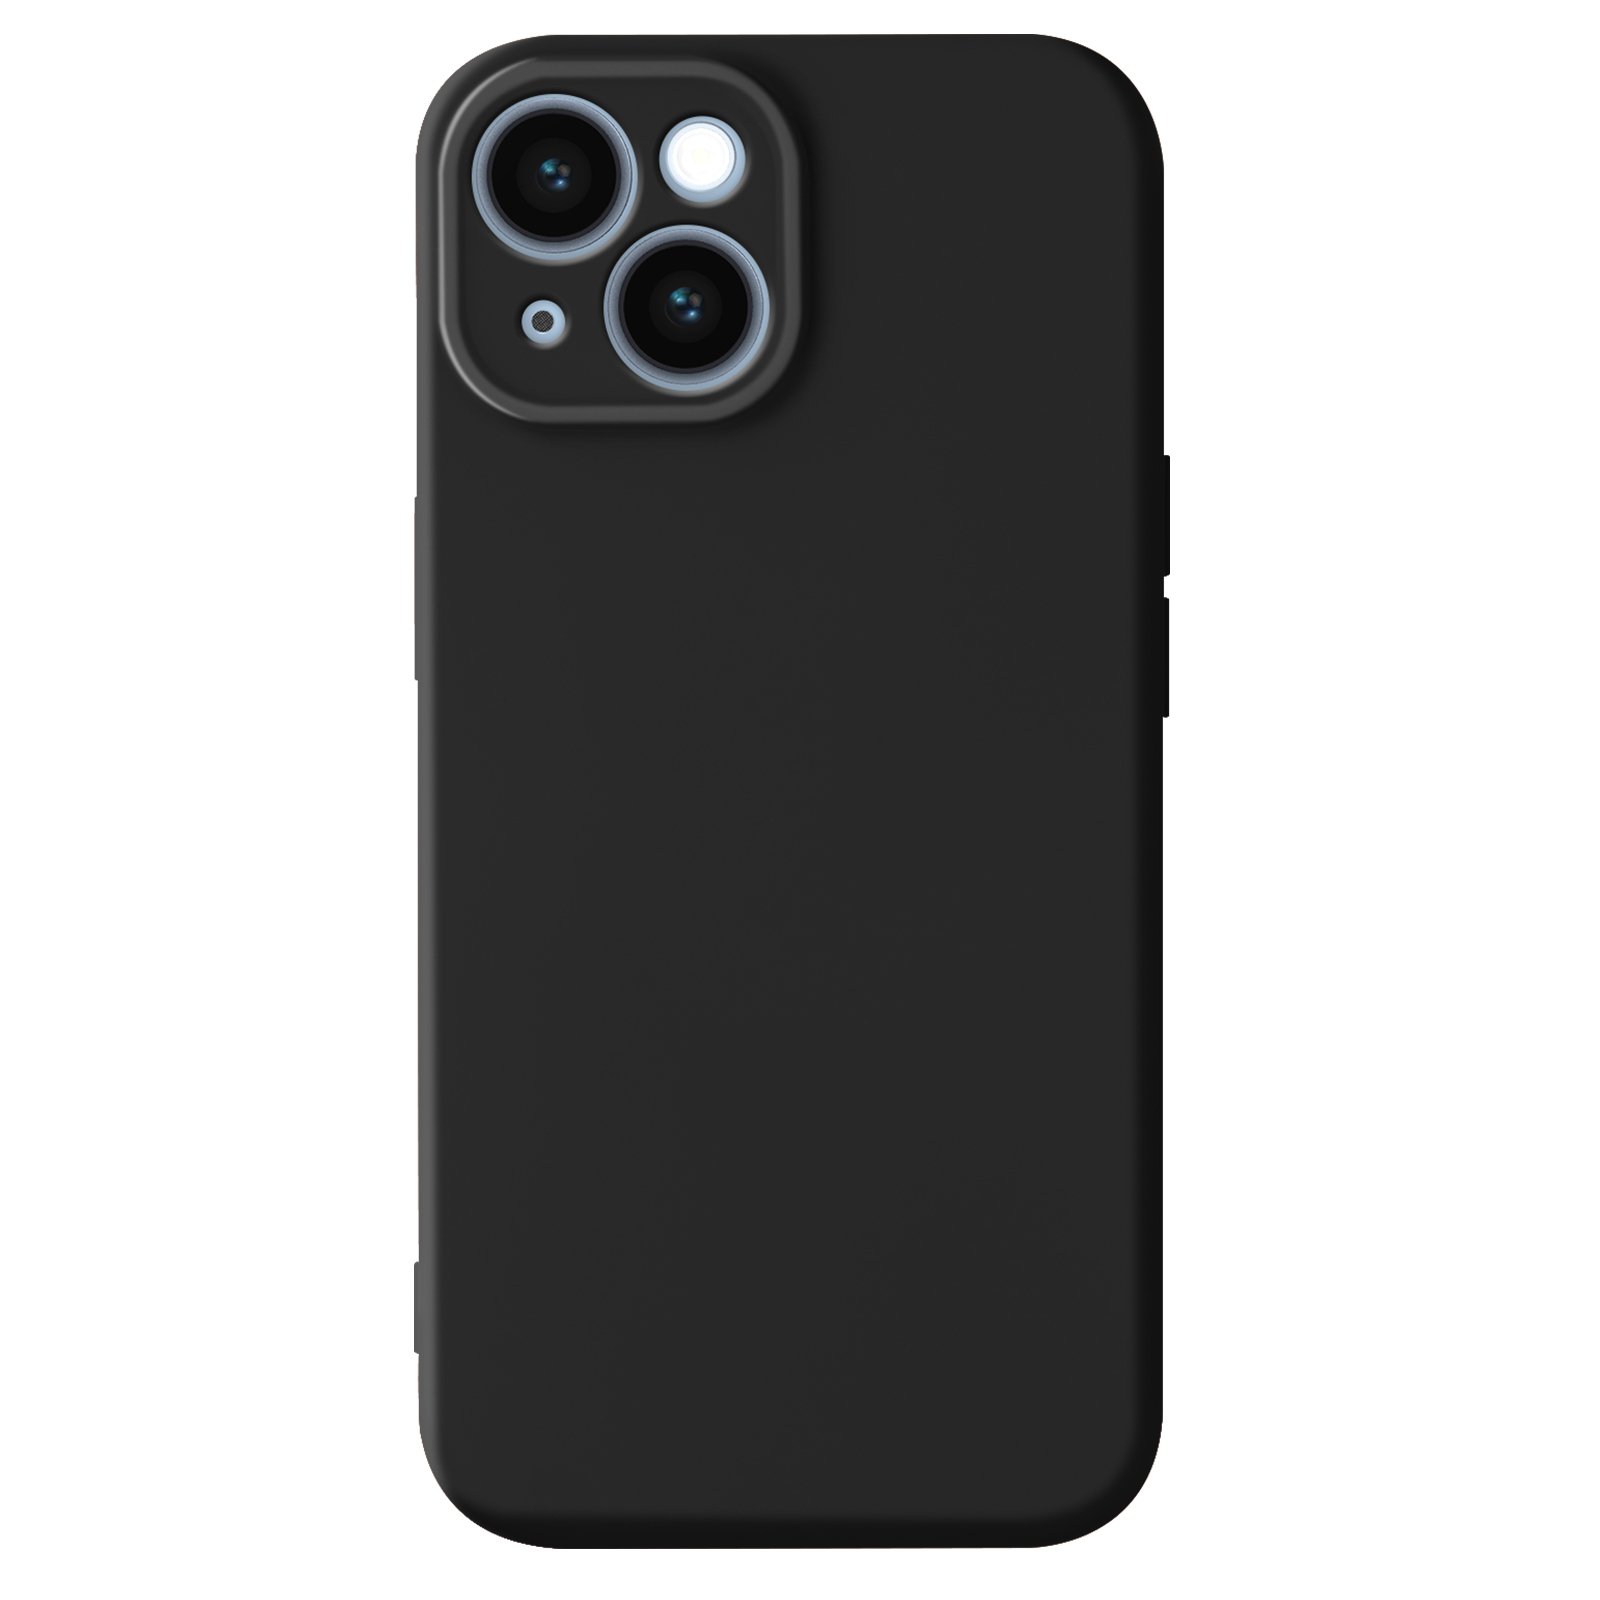 Coque IPhone 11 Noir Souple Protection Caméra